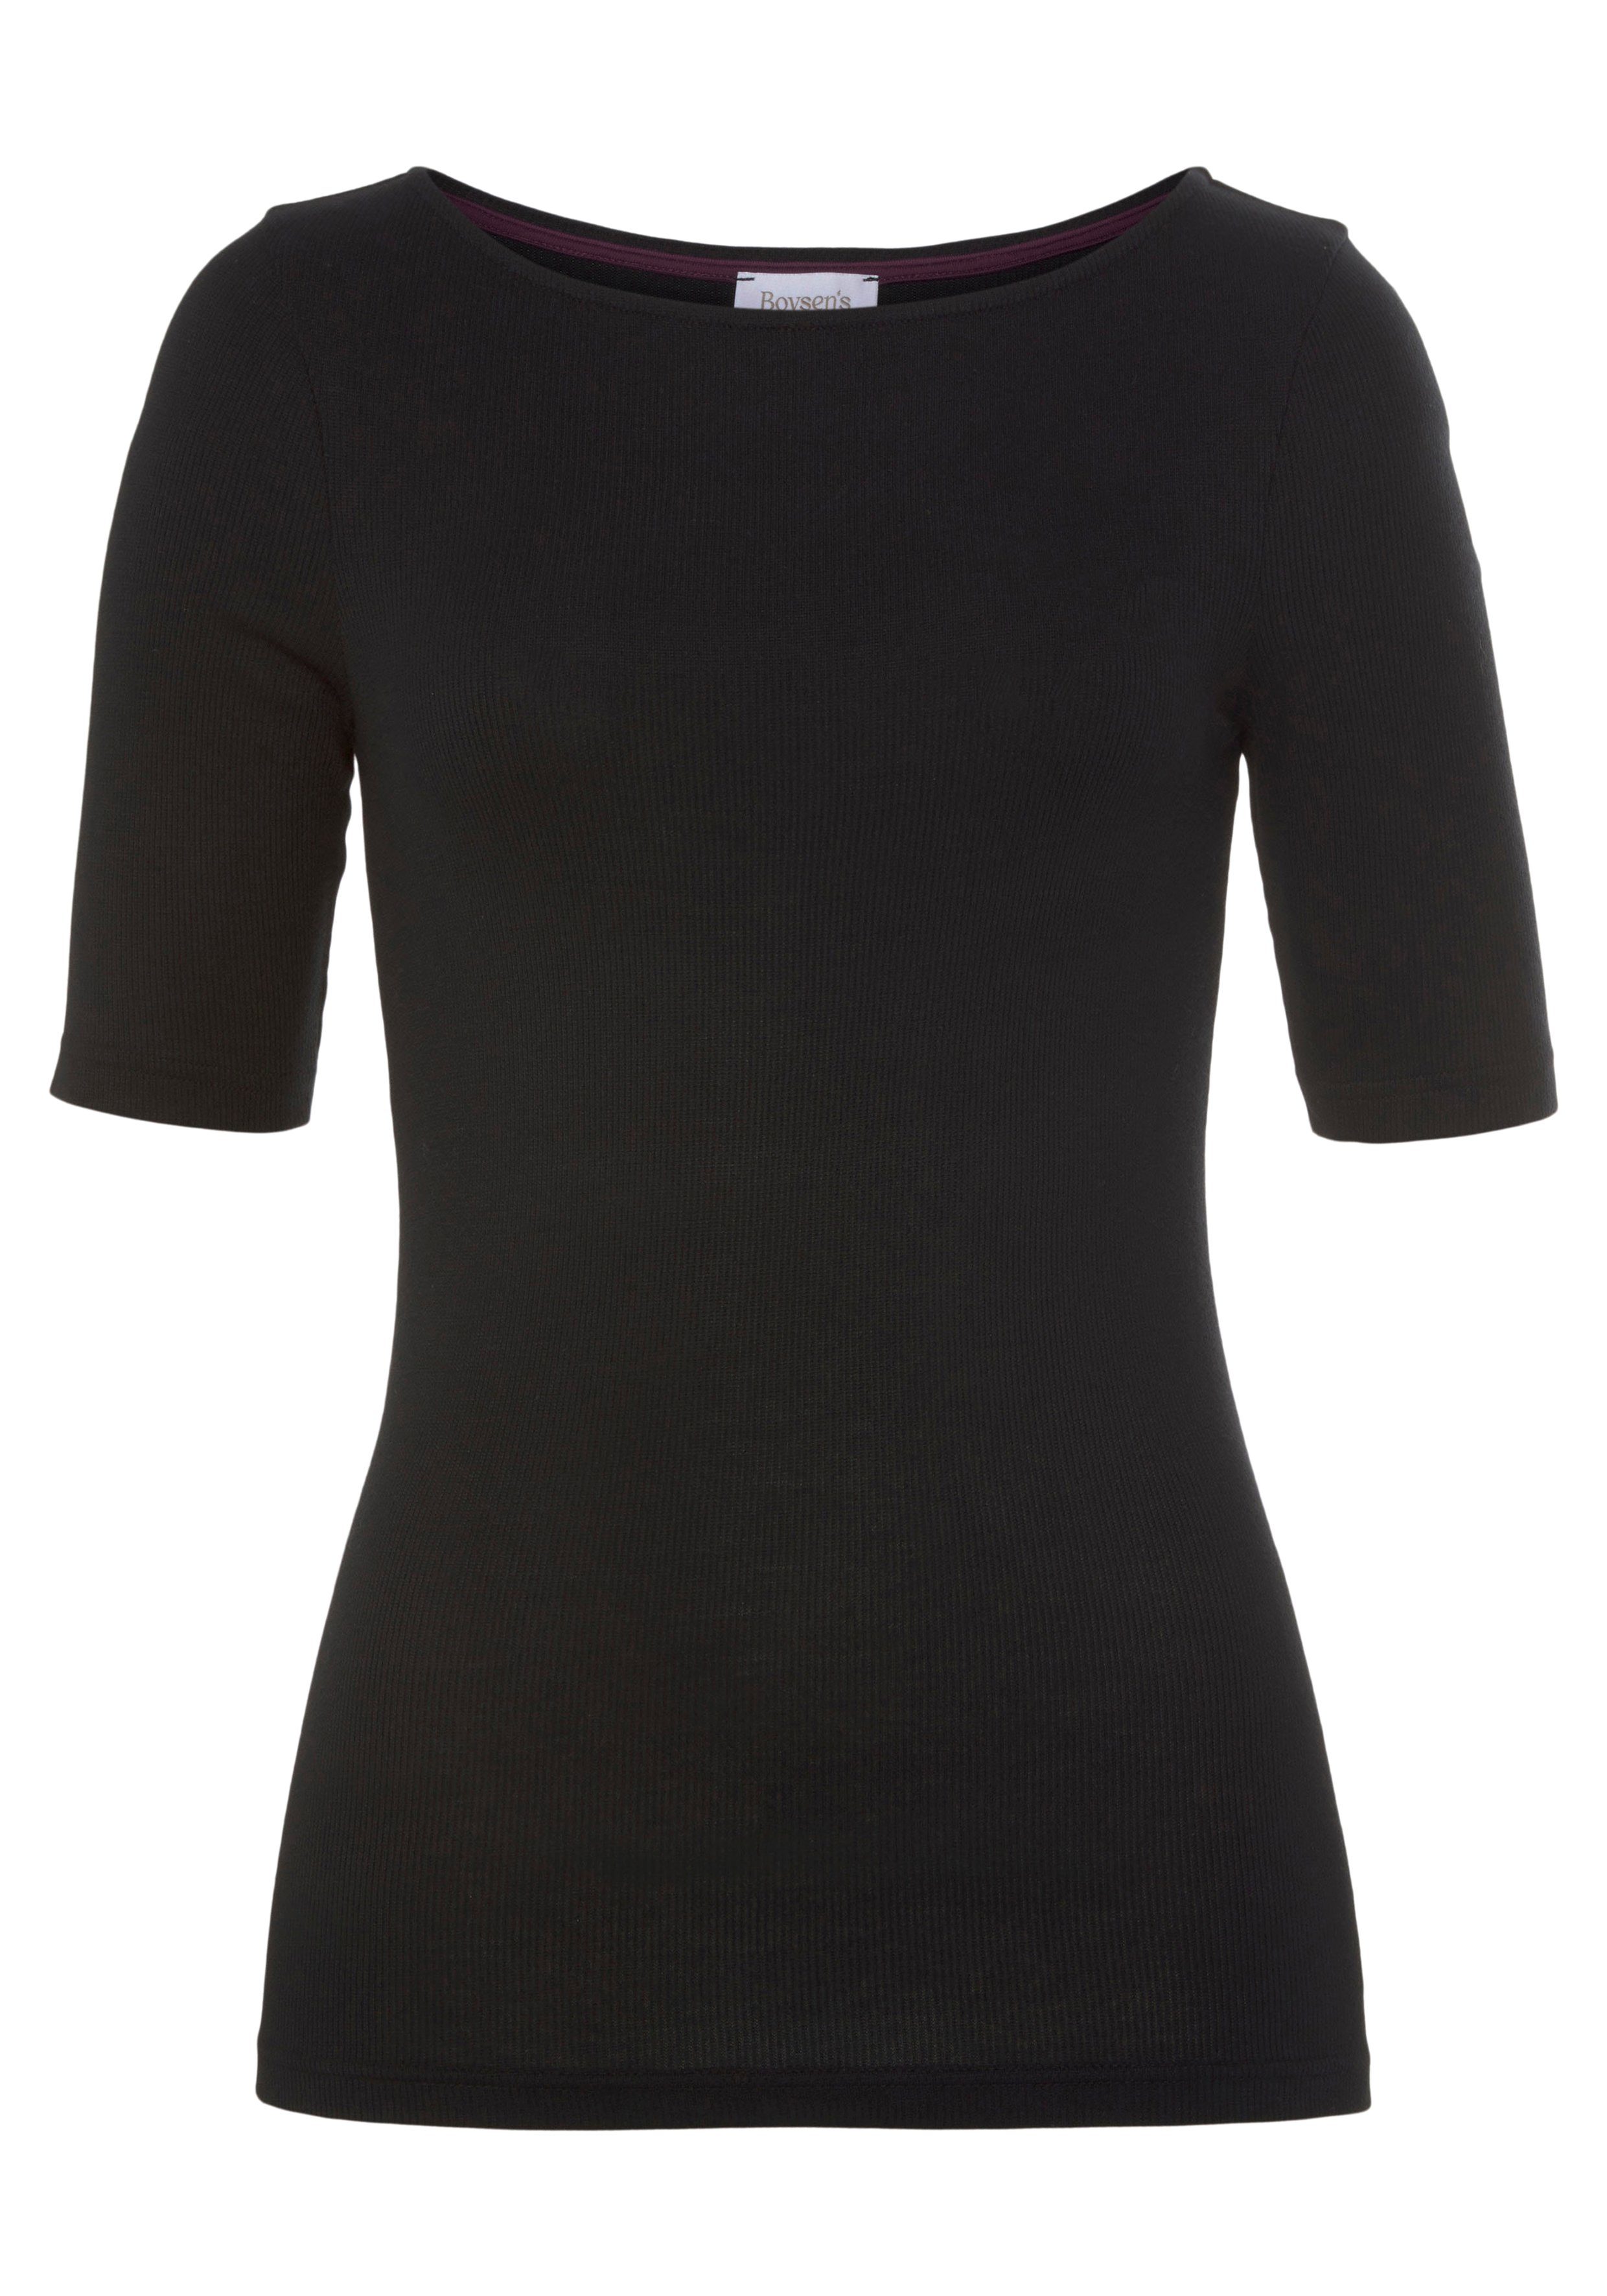 Boysen's Kurzarmshirt mit - schwarz U-Boot-Ausschnitt NEUE KOLLEKTION